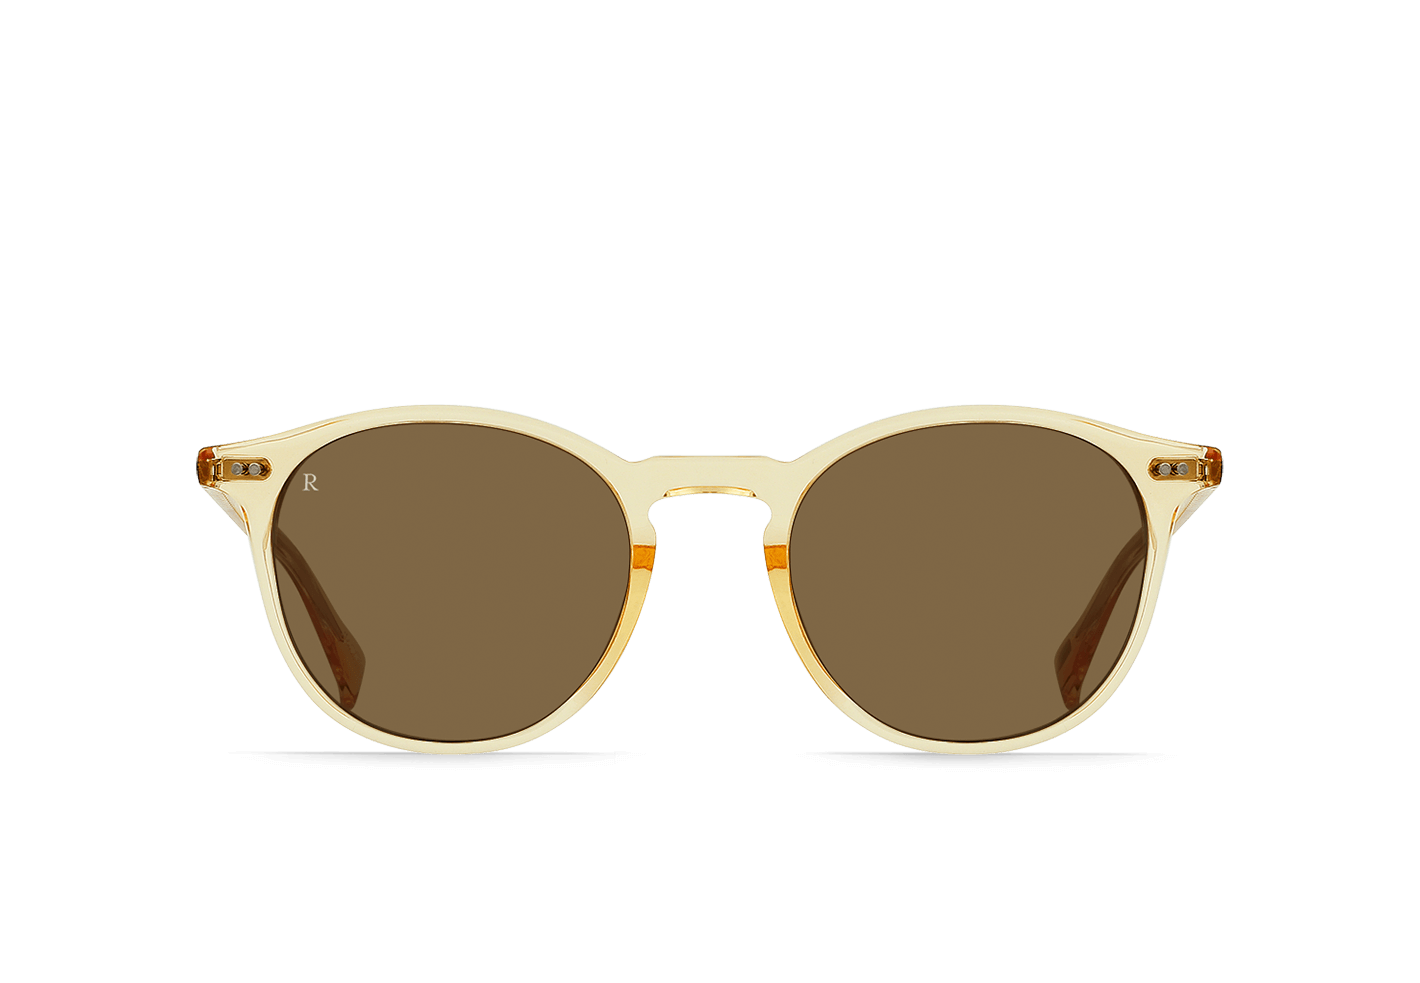 White Sunglasses - Bloomingdale's